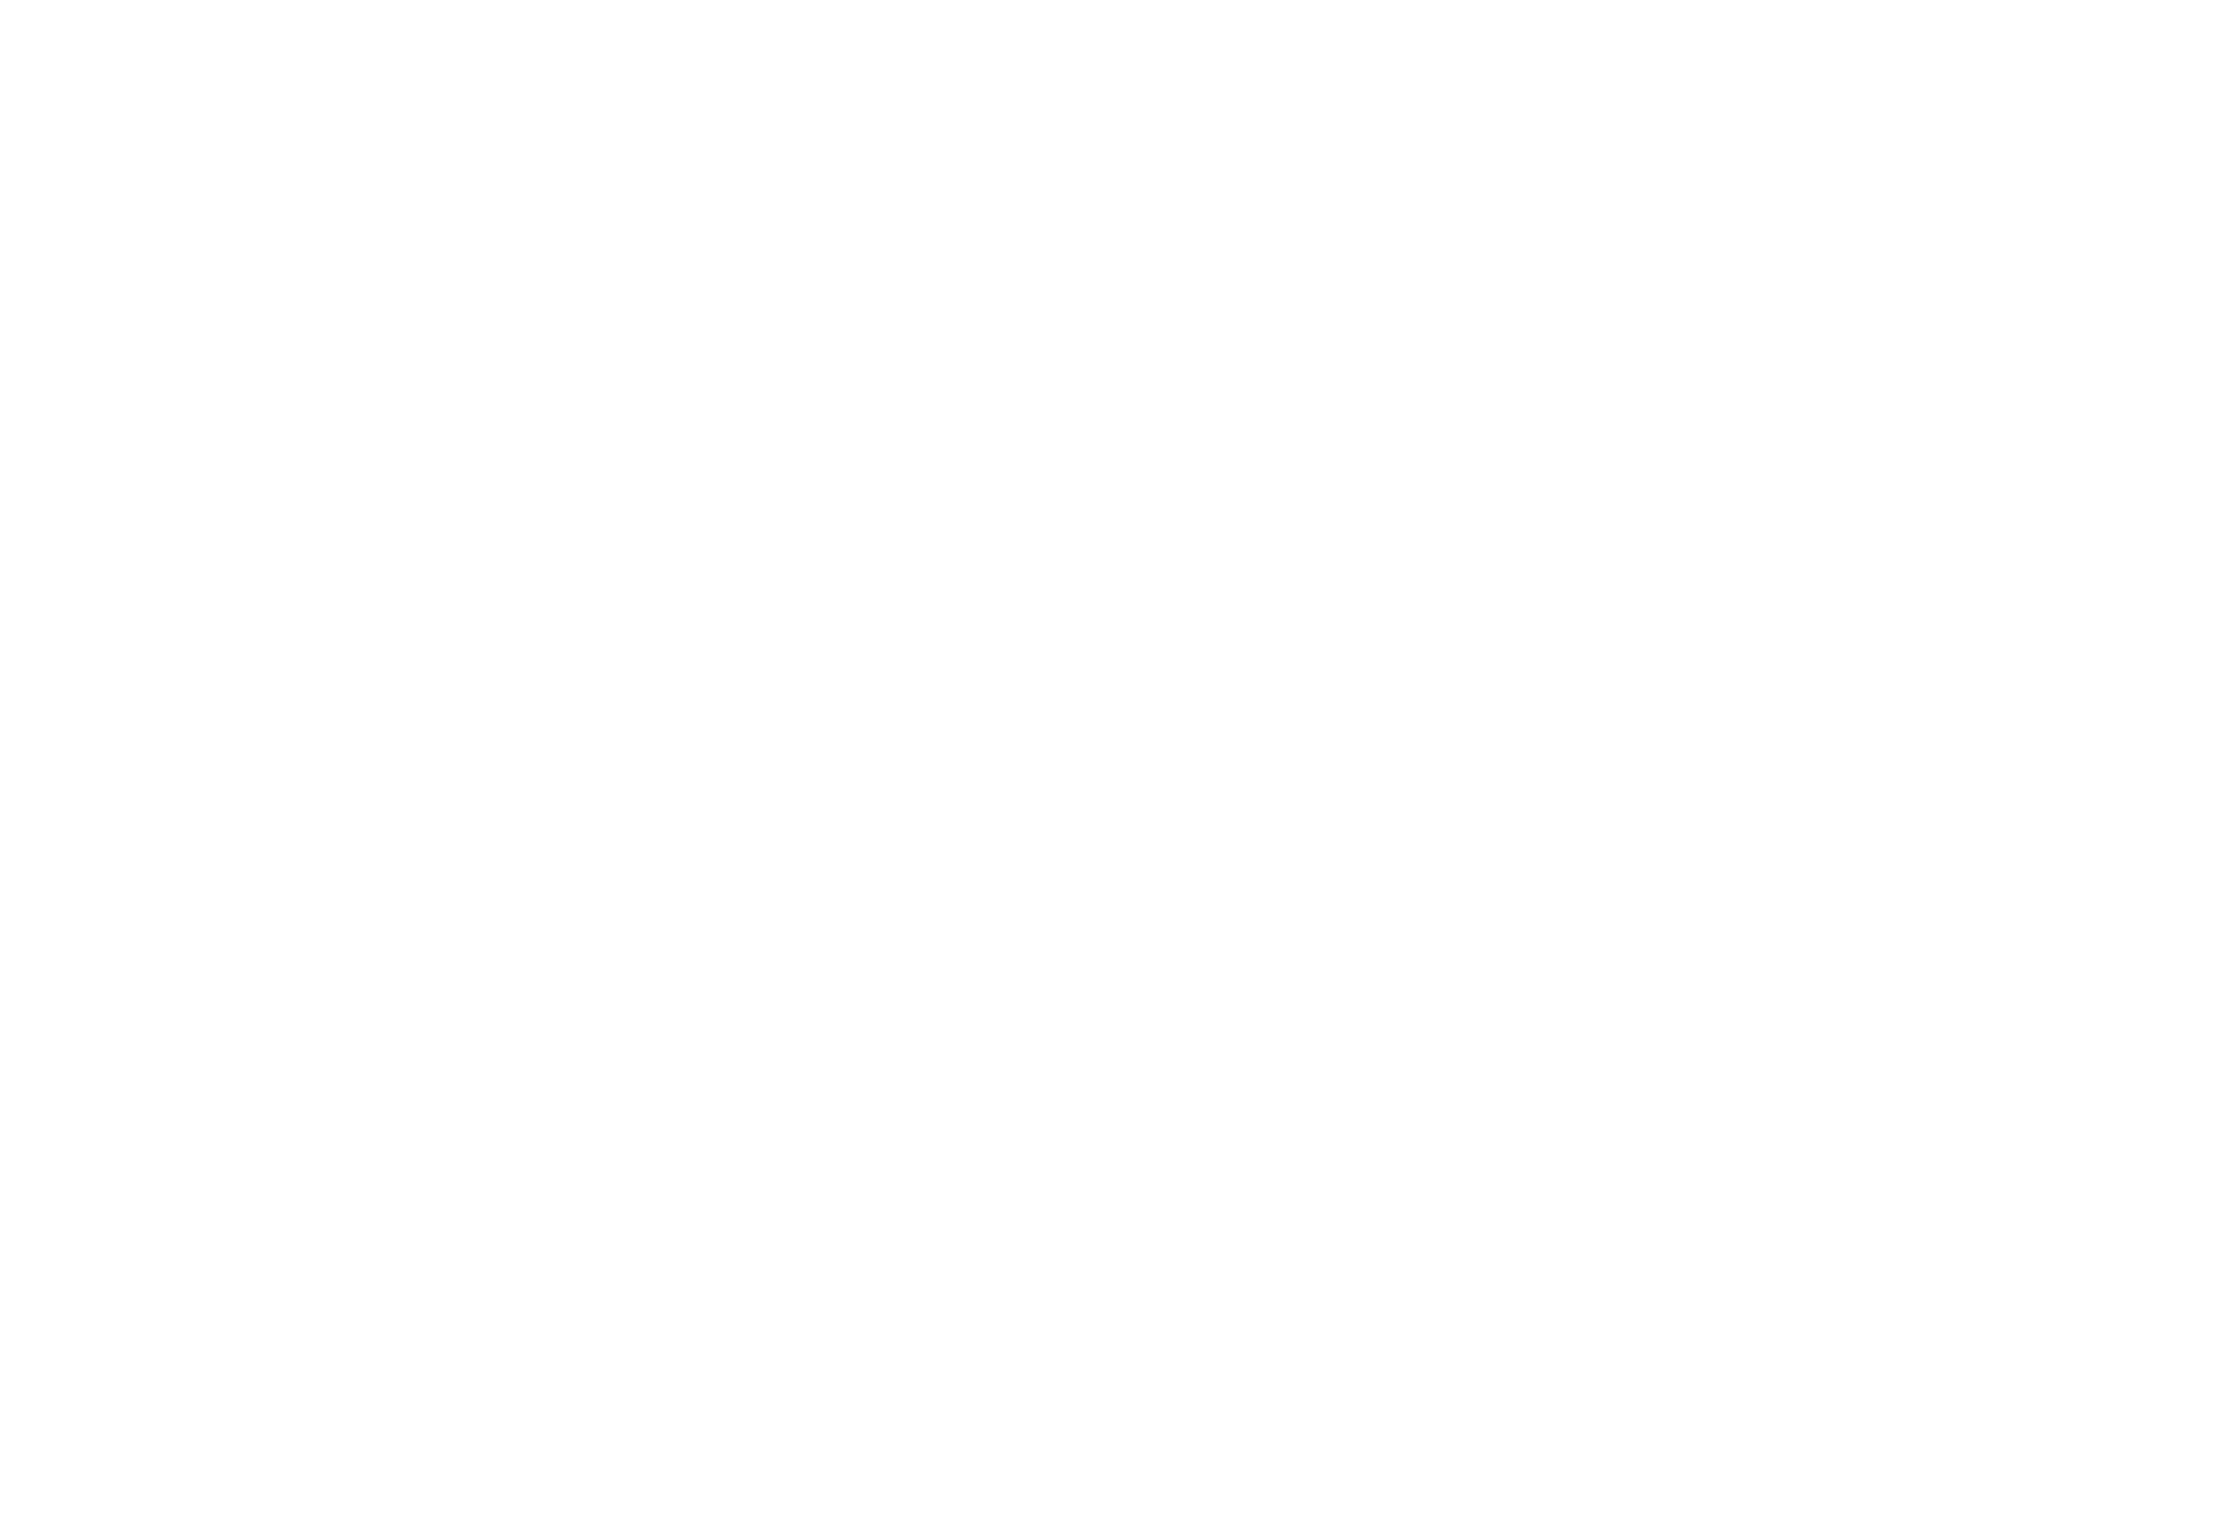 Team Daedo won bronze in Baku